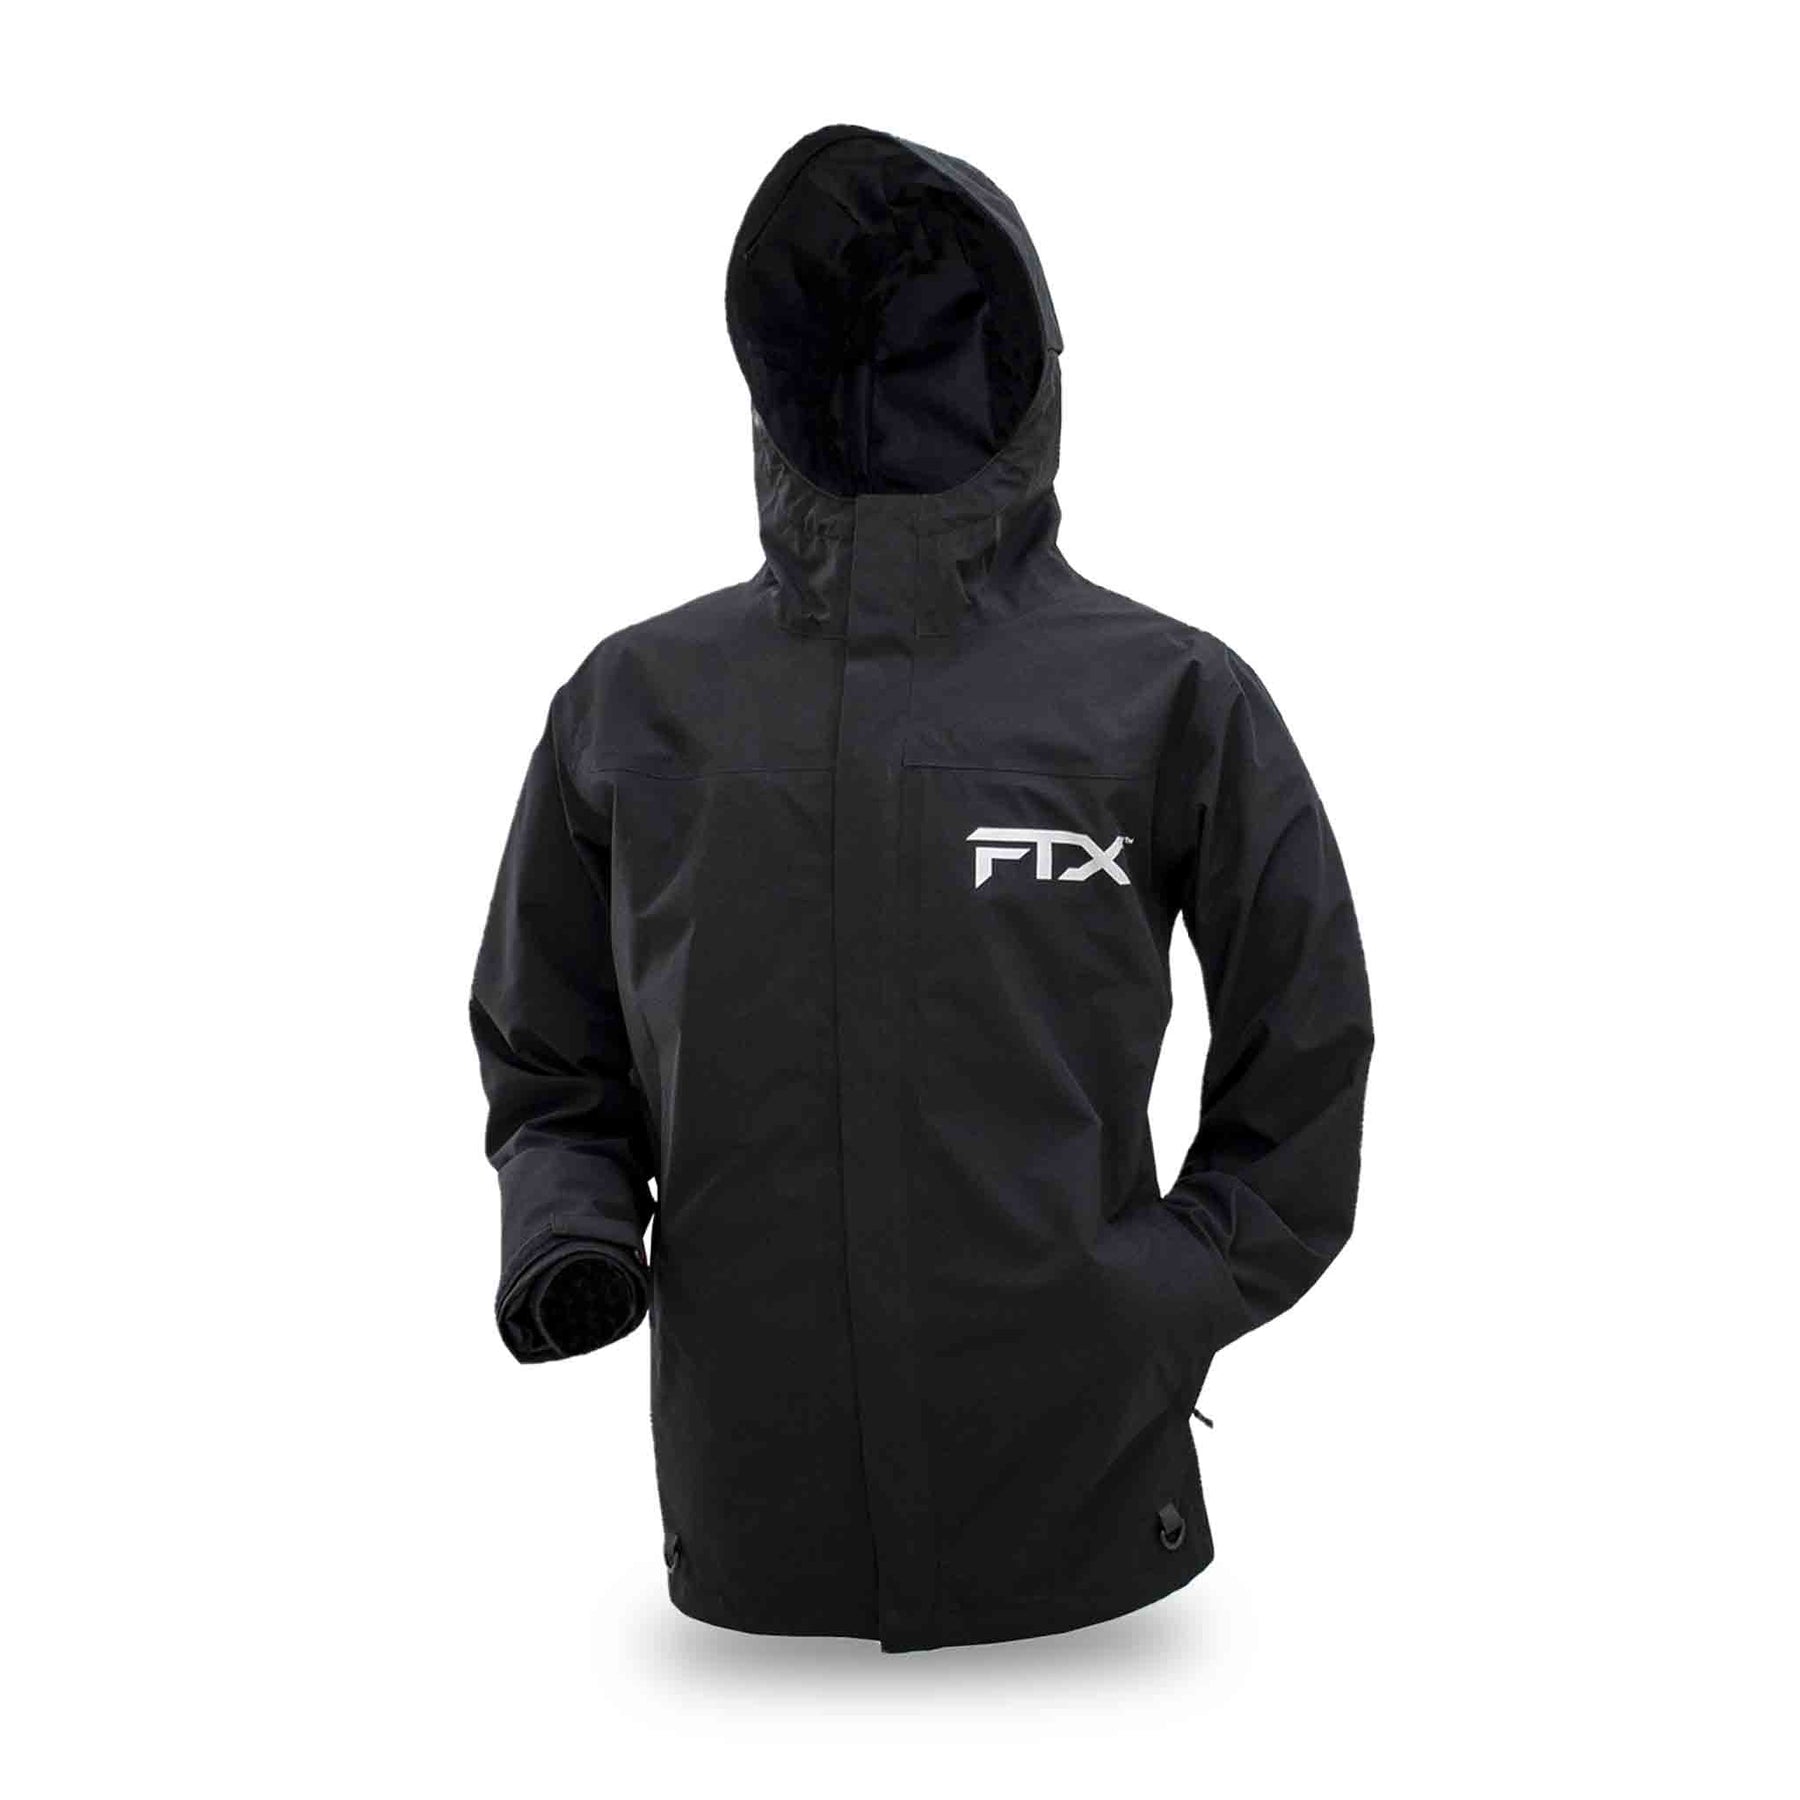 Frogg Toggs FTX Armor Fishing Jacket